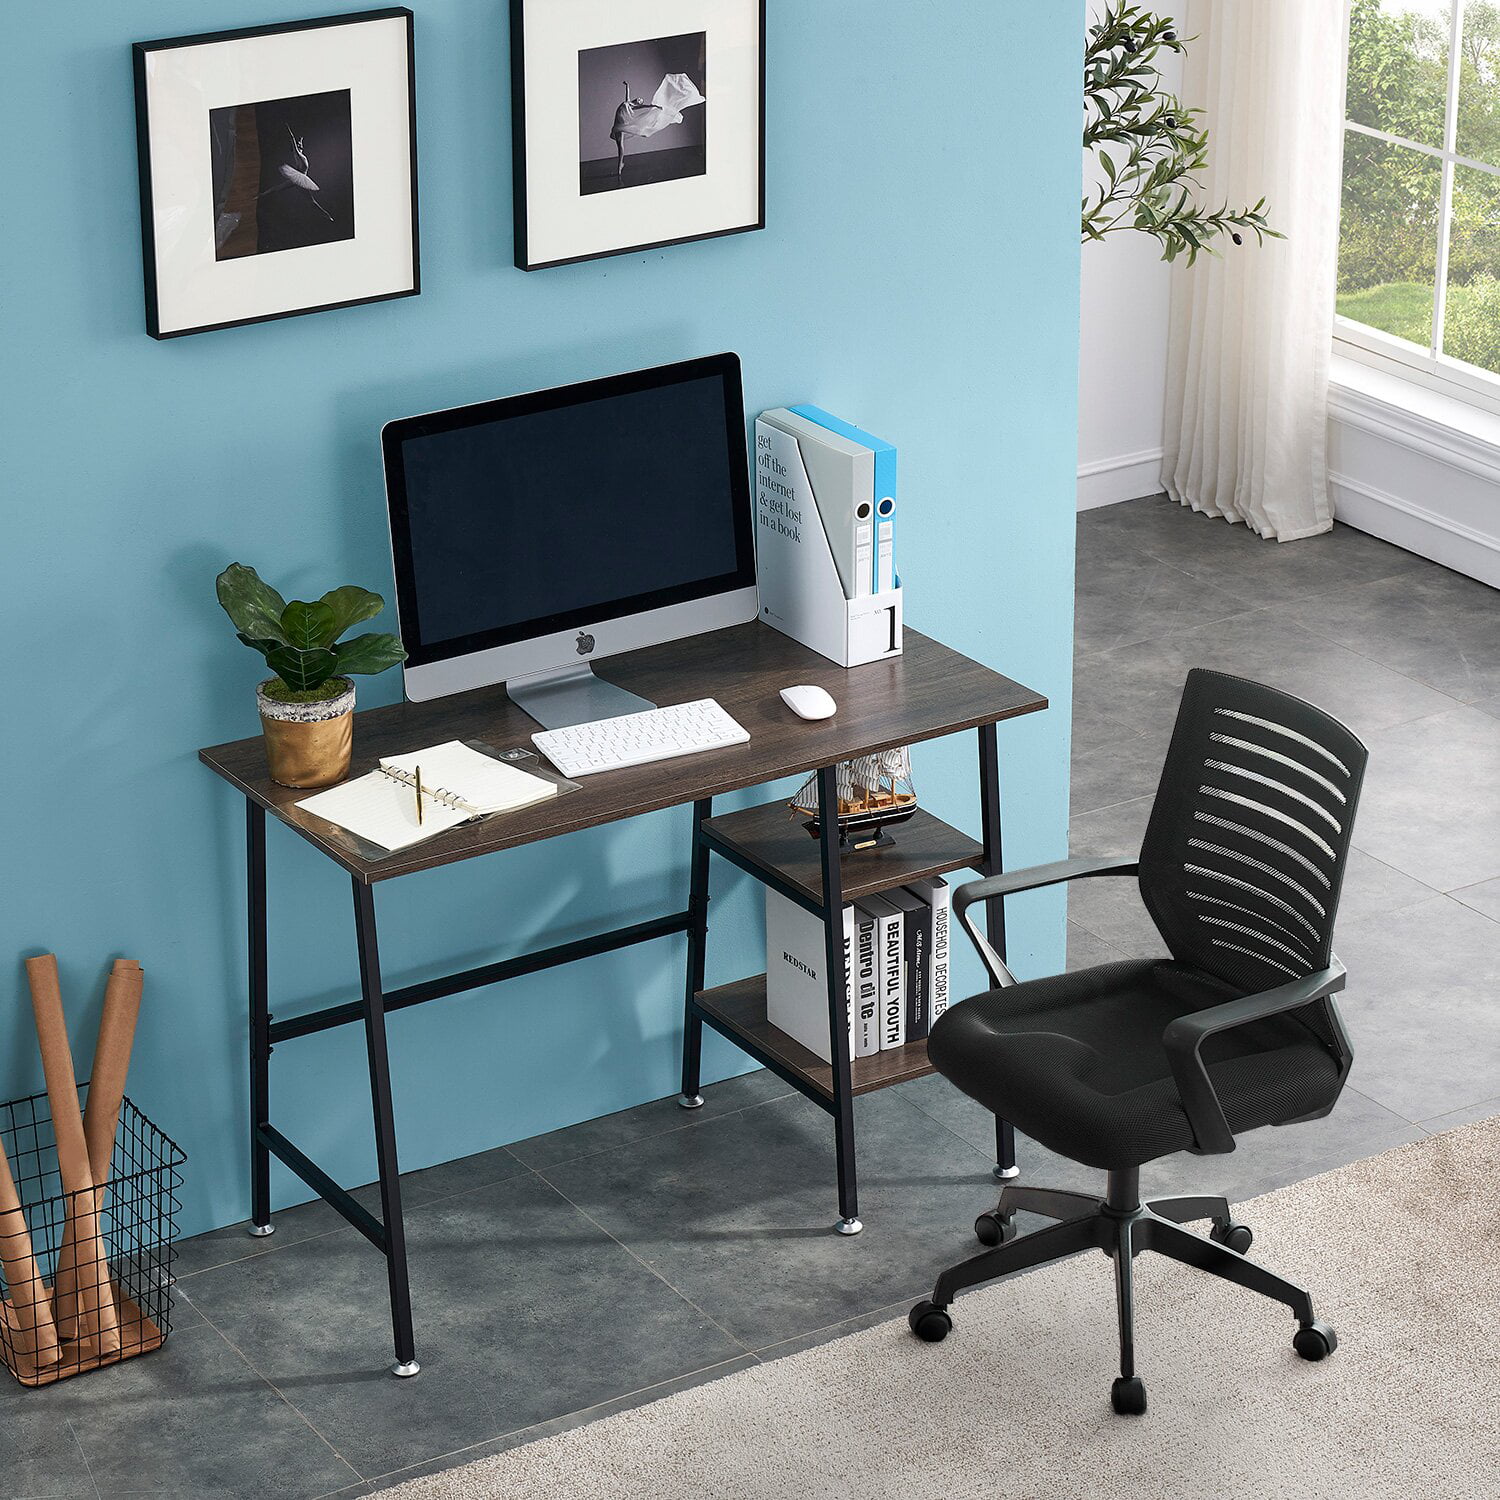 Desk and Chair Set - Walmart.com